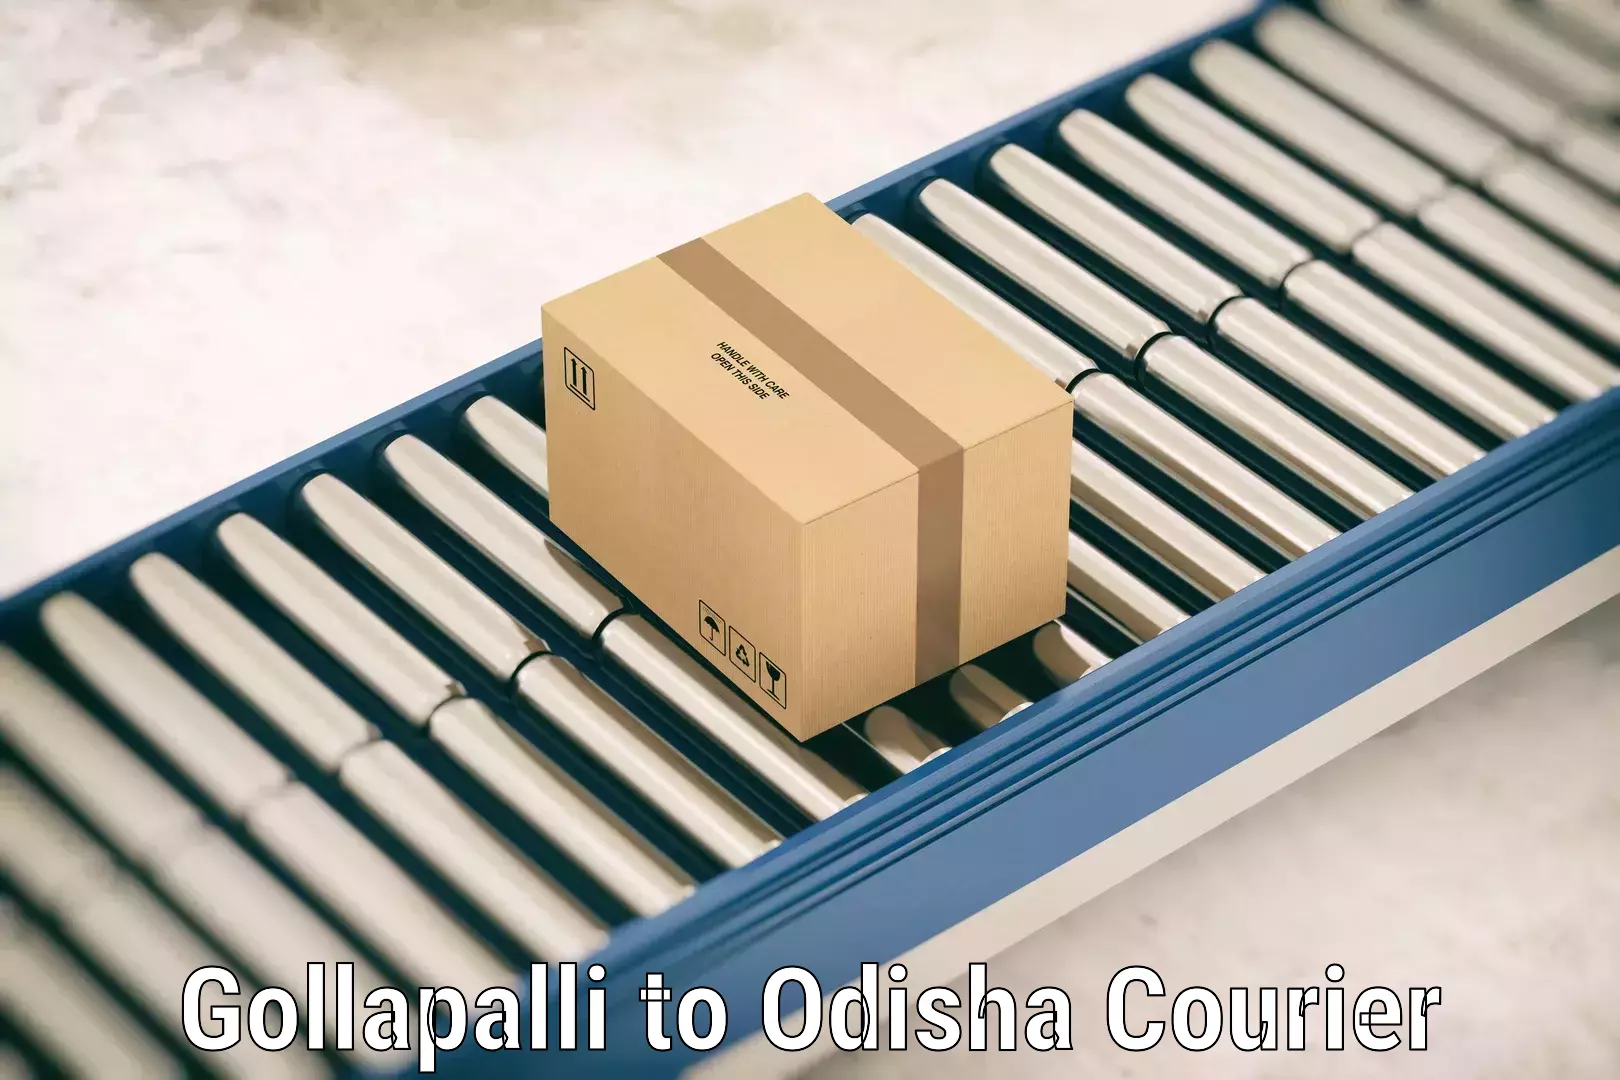 Baggage transport network Gollapalli to Sohela